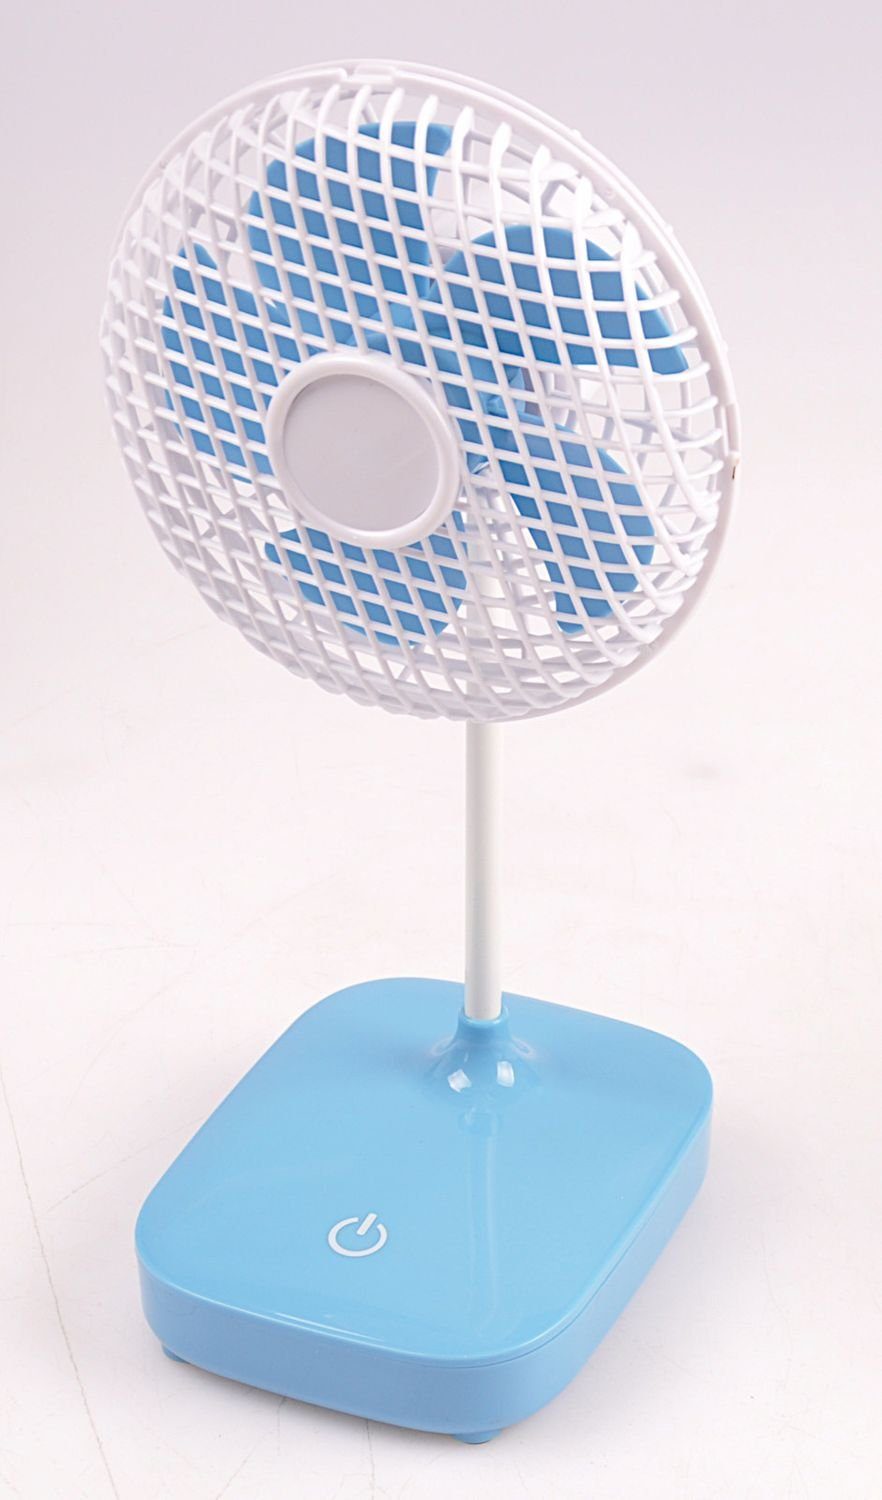 BURI Standventilator Mini-Ventilator blau Gebläse Kühler Ø13cm Lüfter Tischventilator